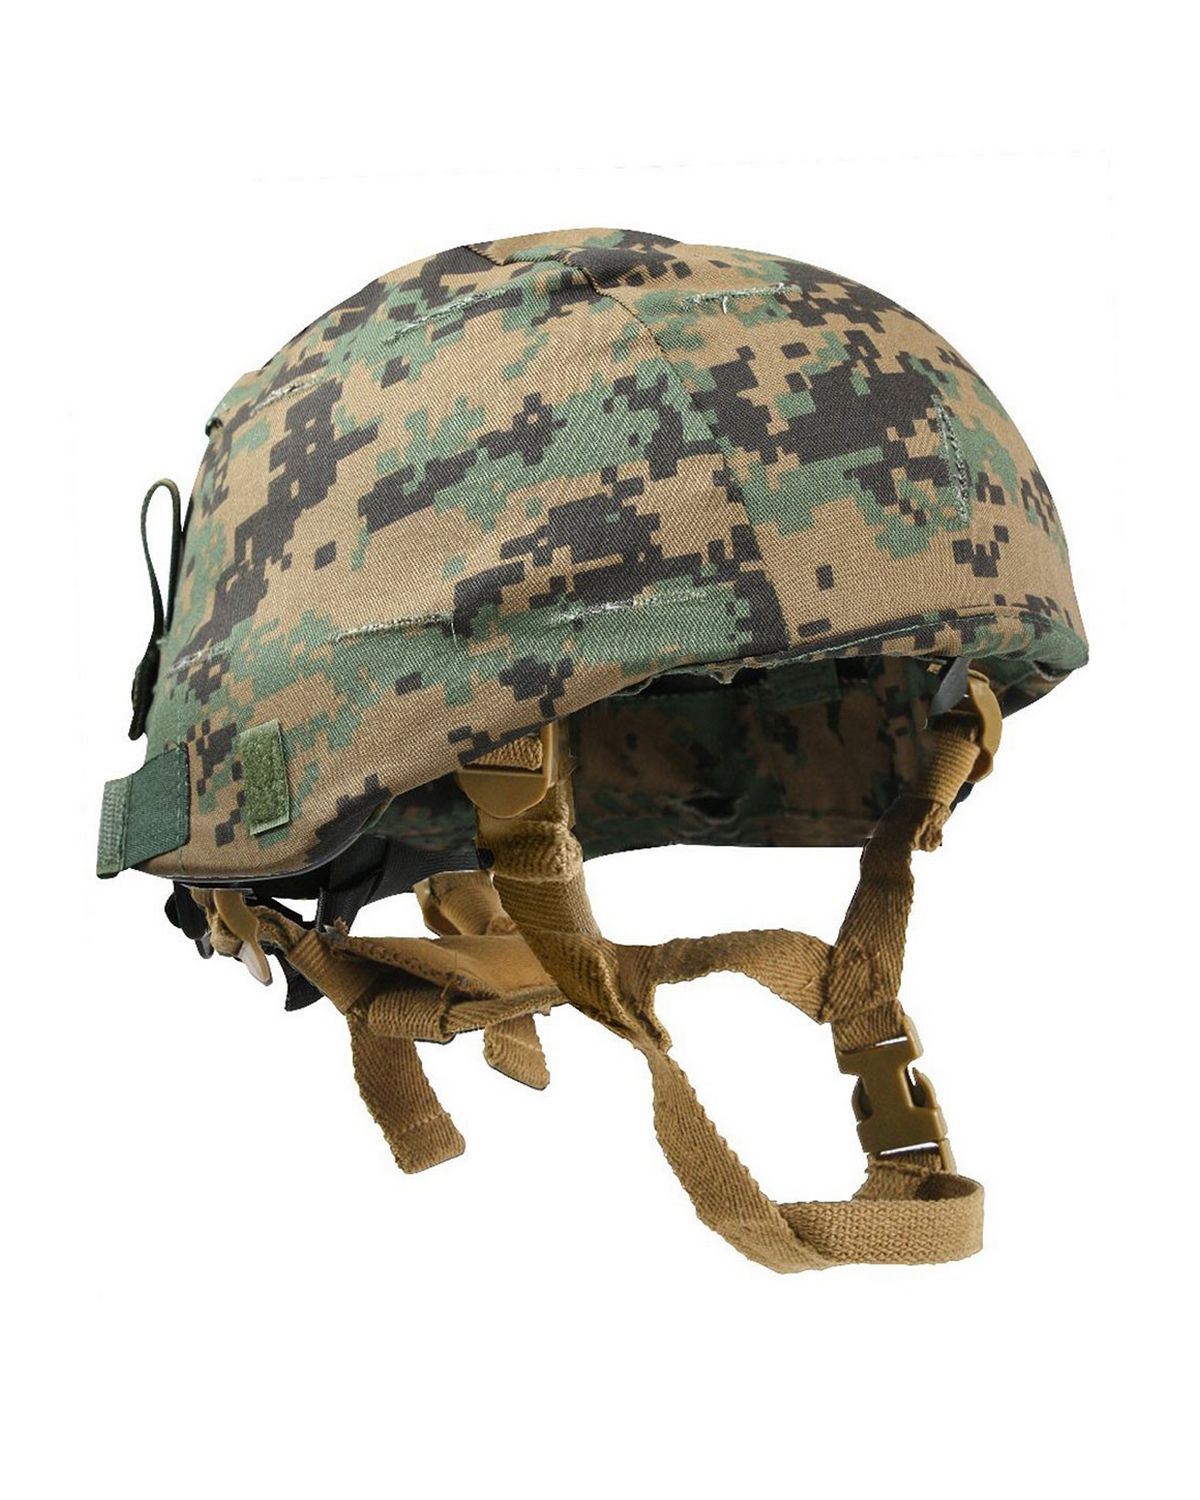 Army Helmet Size Chart